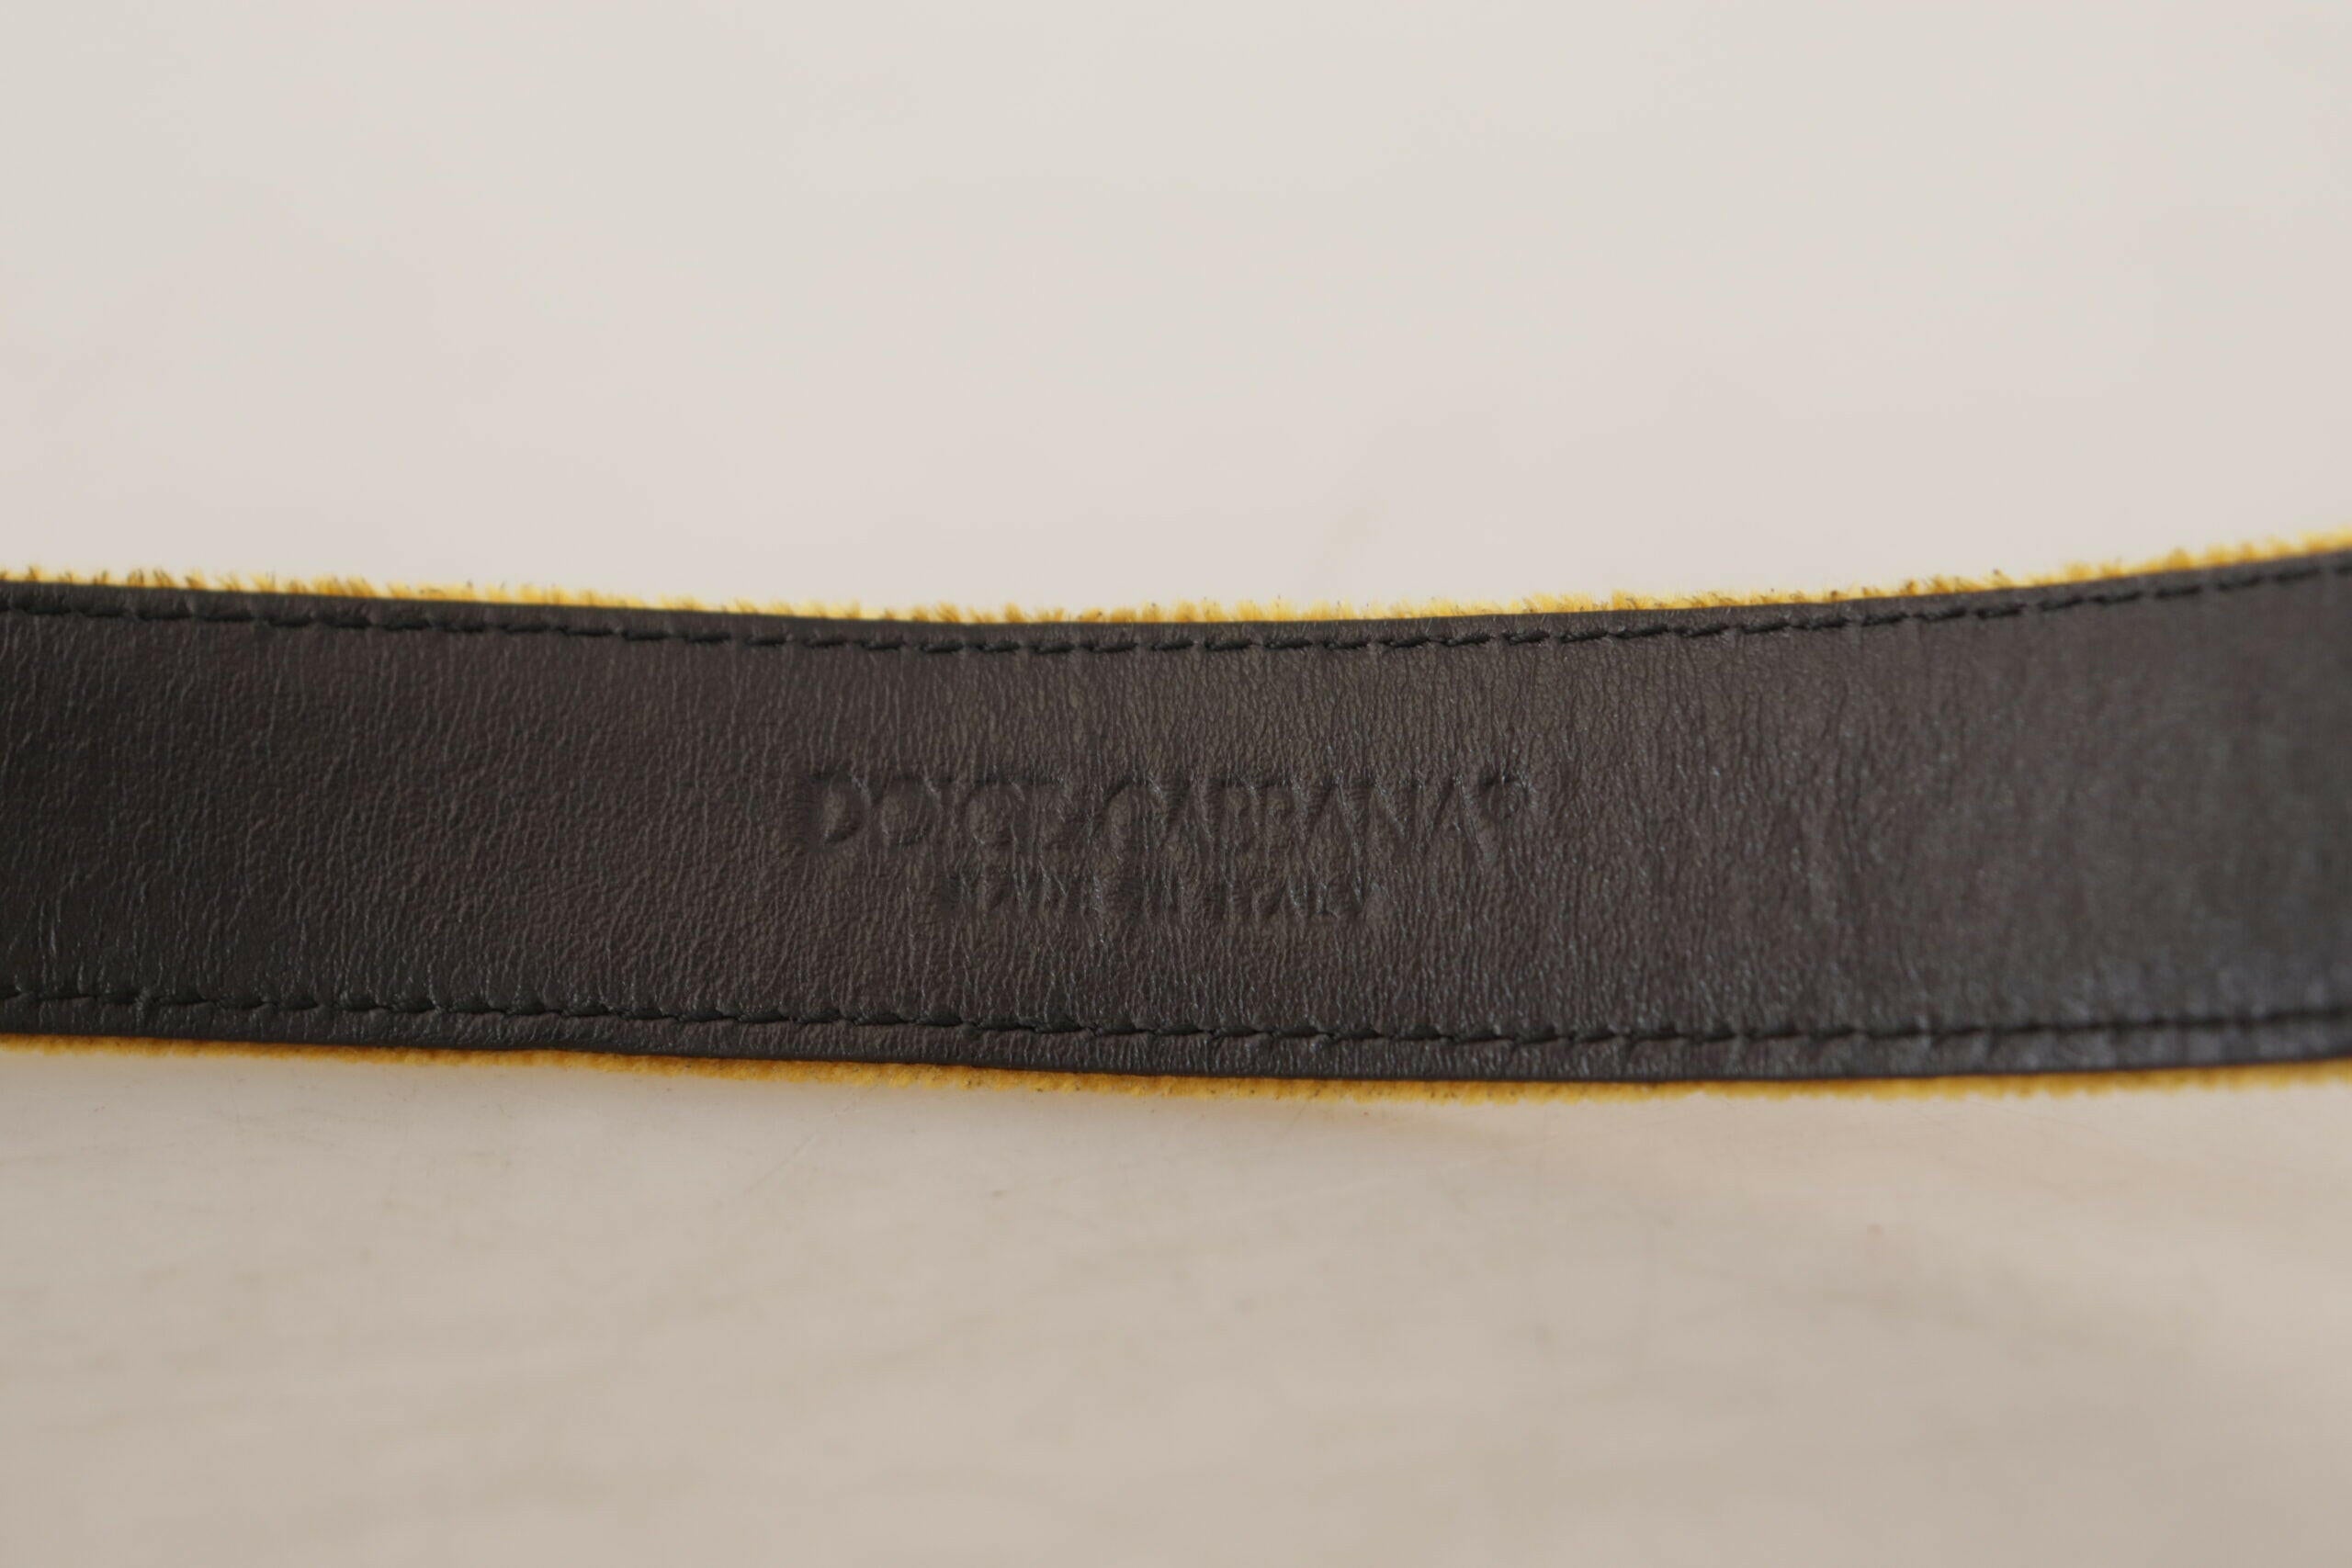 Dolce & Gabbana Mustard Velvet Gold Logo Engraved Metal Buckle Belt - GENUINE AUTHENTIC BRAND LLC  